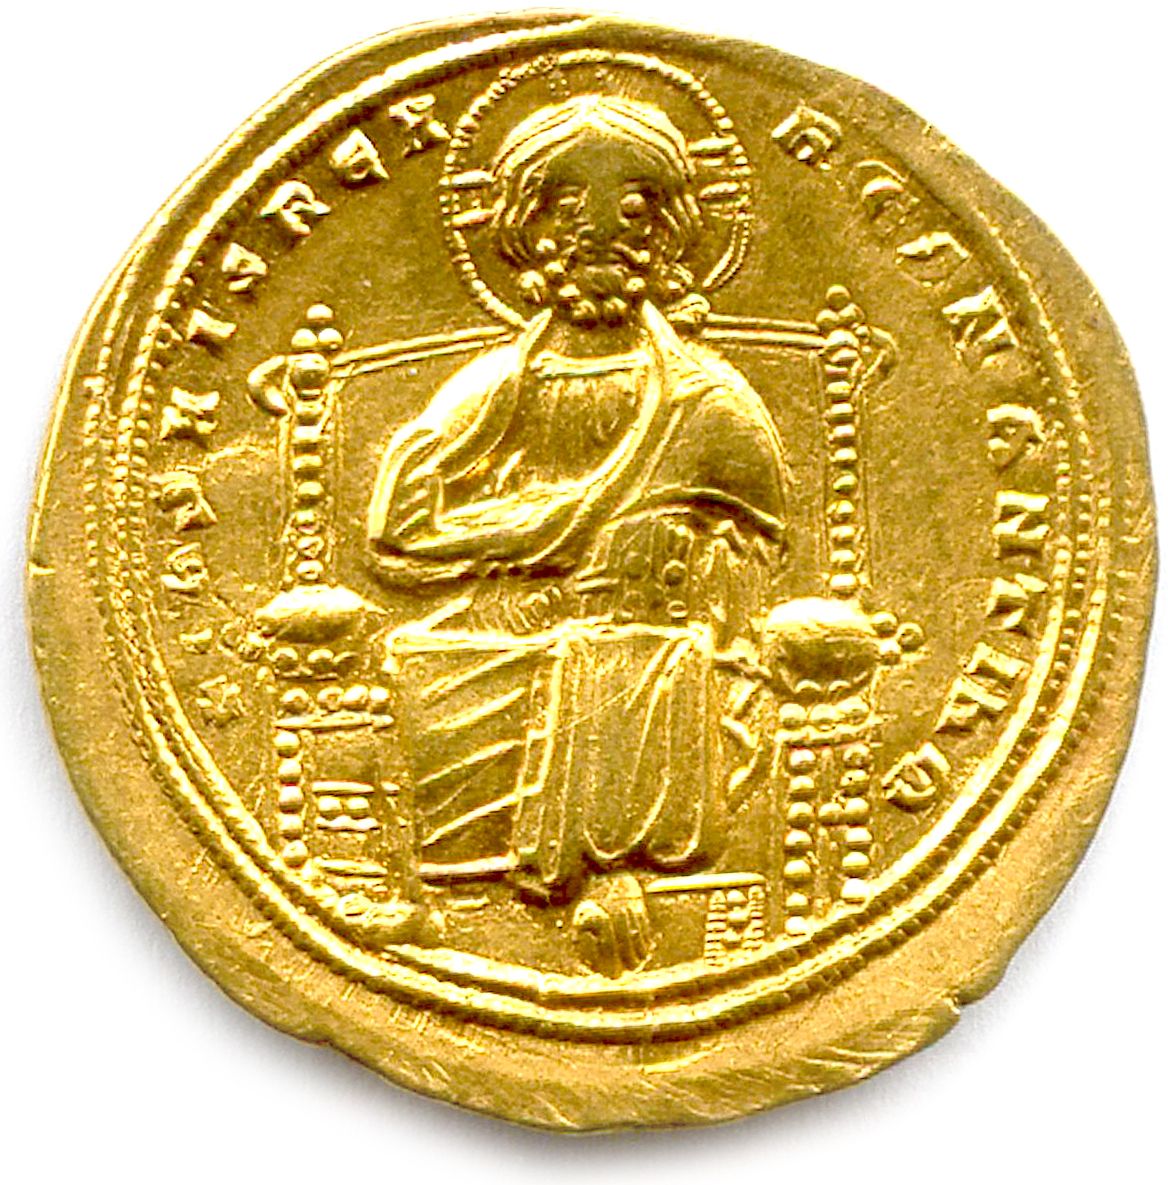 Null ROMAIN III ARGYRE 12 novembre 1028 - 11 avril 1034

IhS XIS REX REGNANTInm.&hellip;